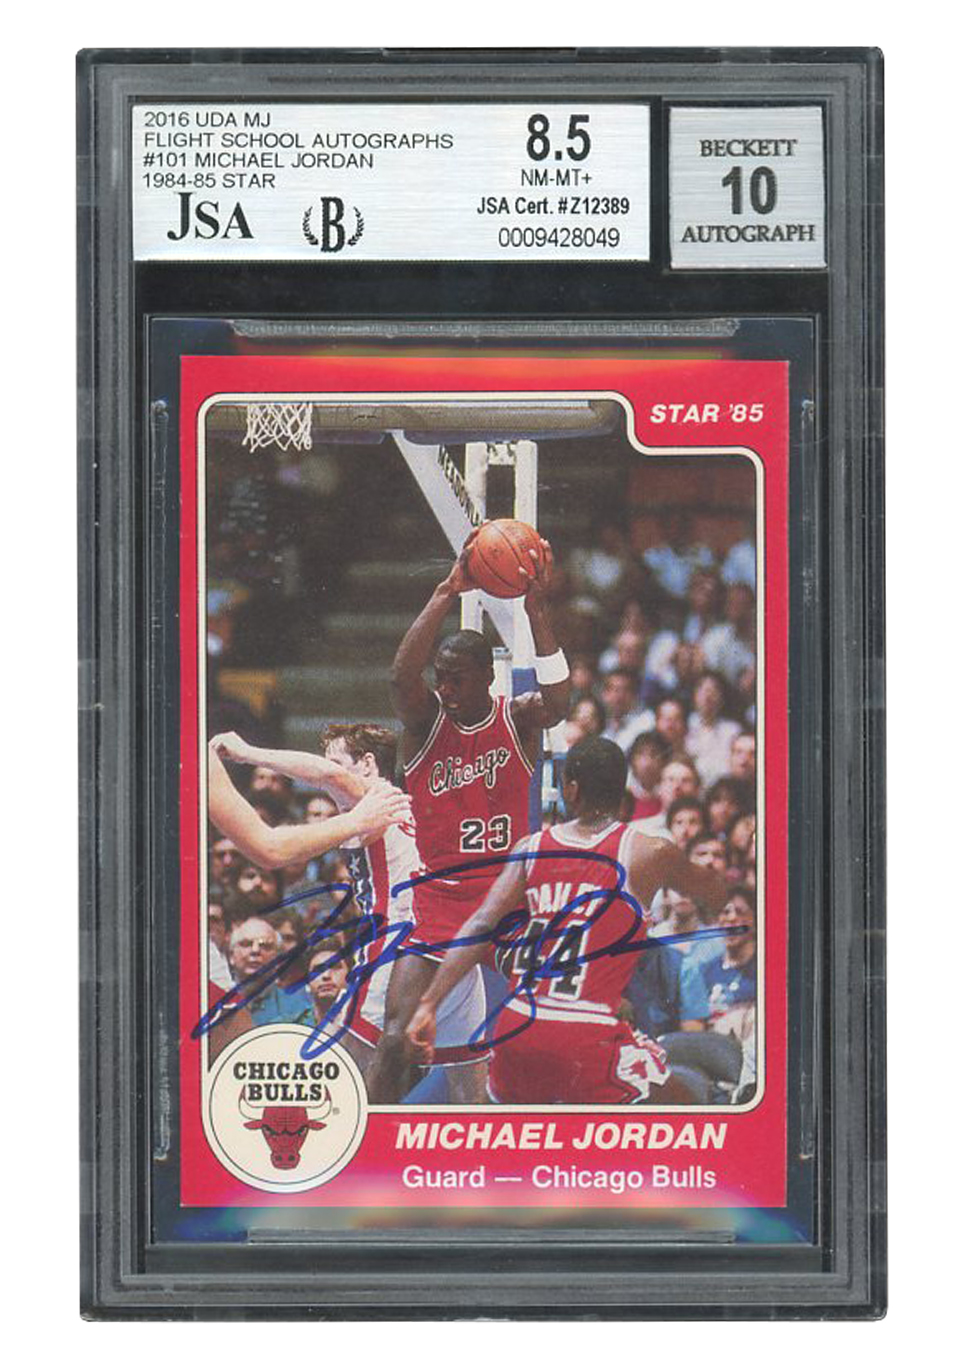  Michael Jordan Autograph Sports Card with Certificate